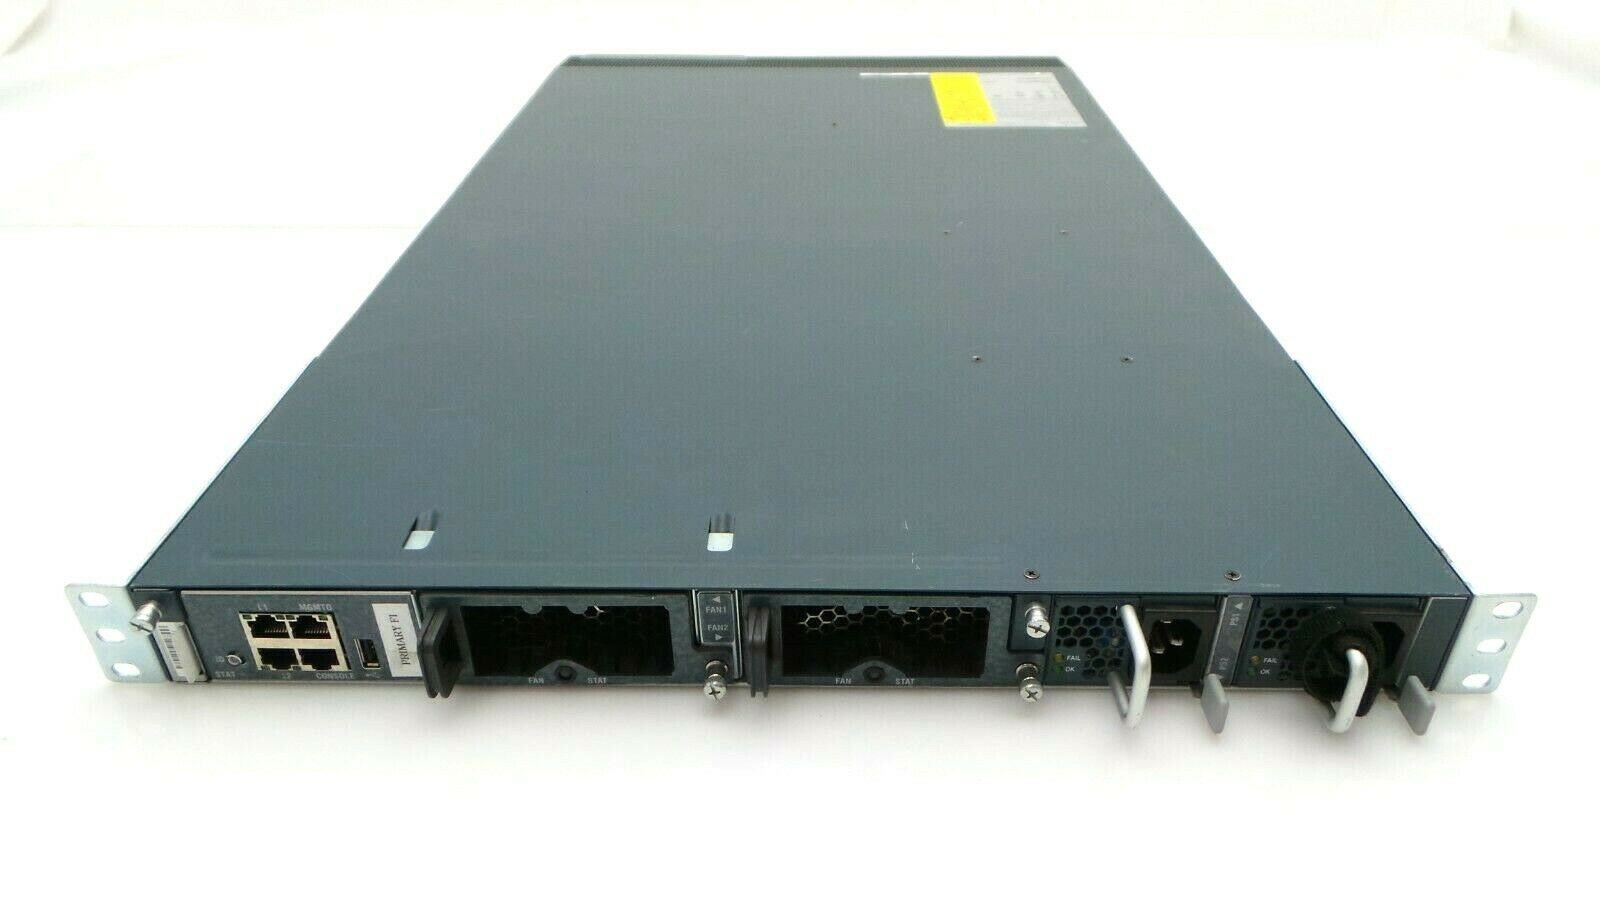 Cisco UCS-FI-6248UP UCS 6248UP 48 port Fabric Interconnect 1RU Switch w/ 2x PSU, Used